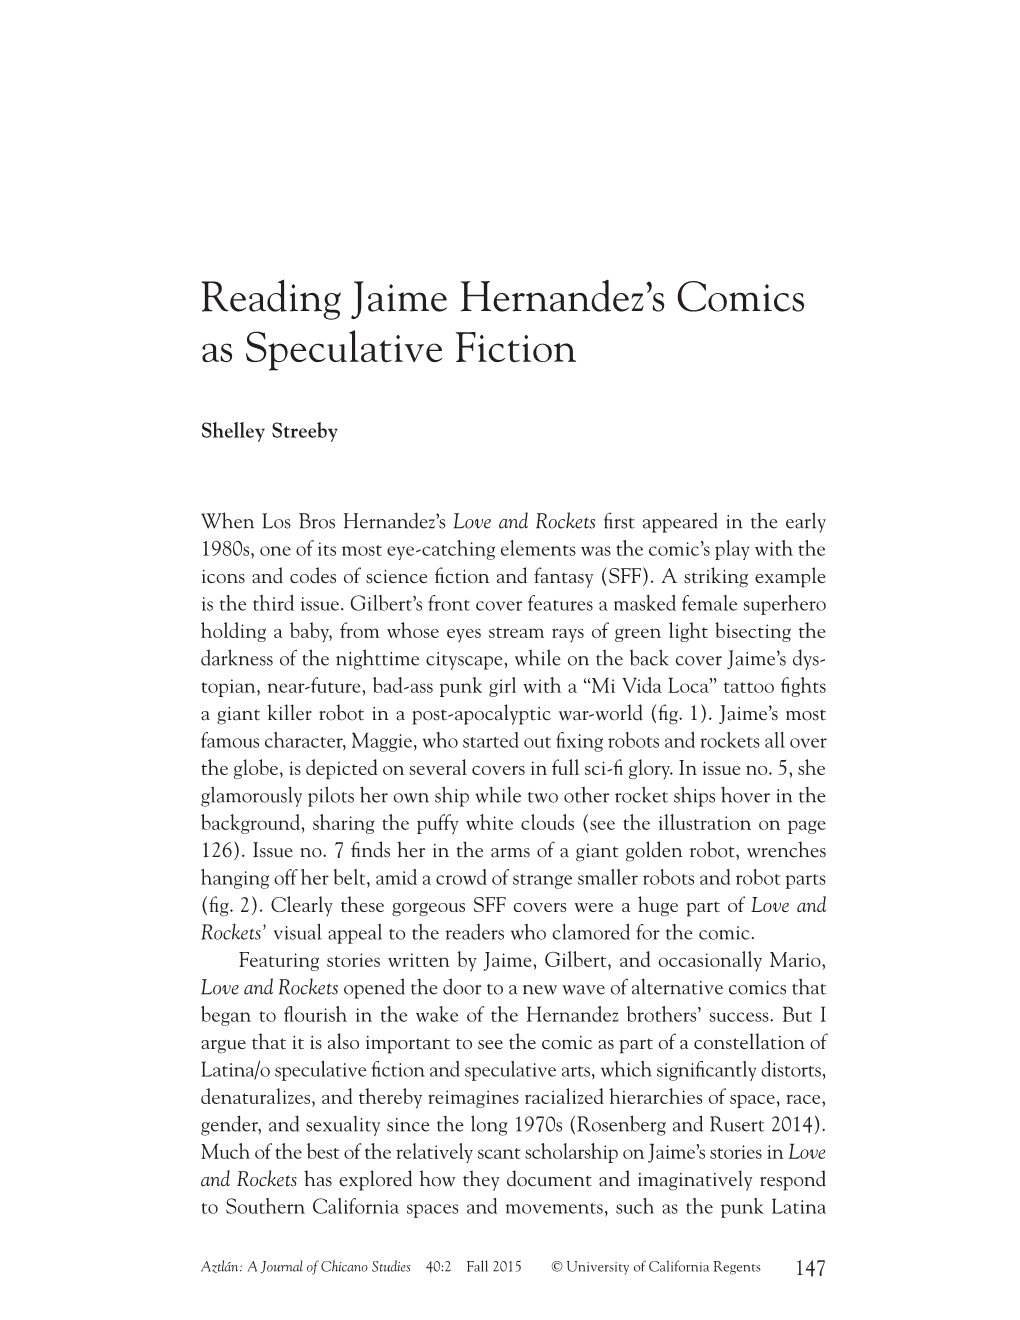 Reading Jaime Hernandez's Comics As Speculative Fiction